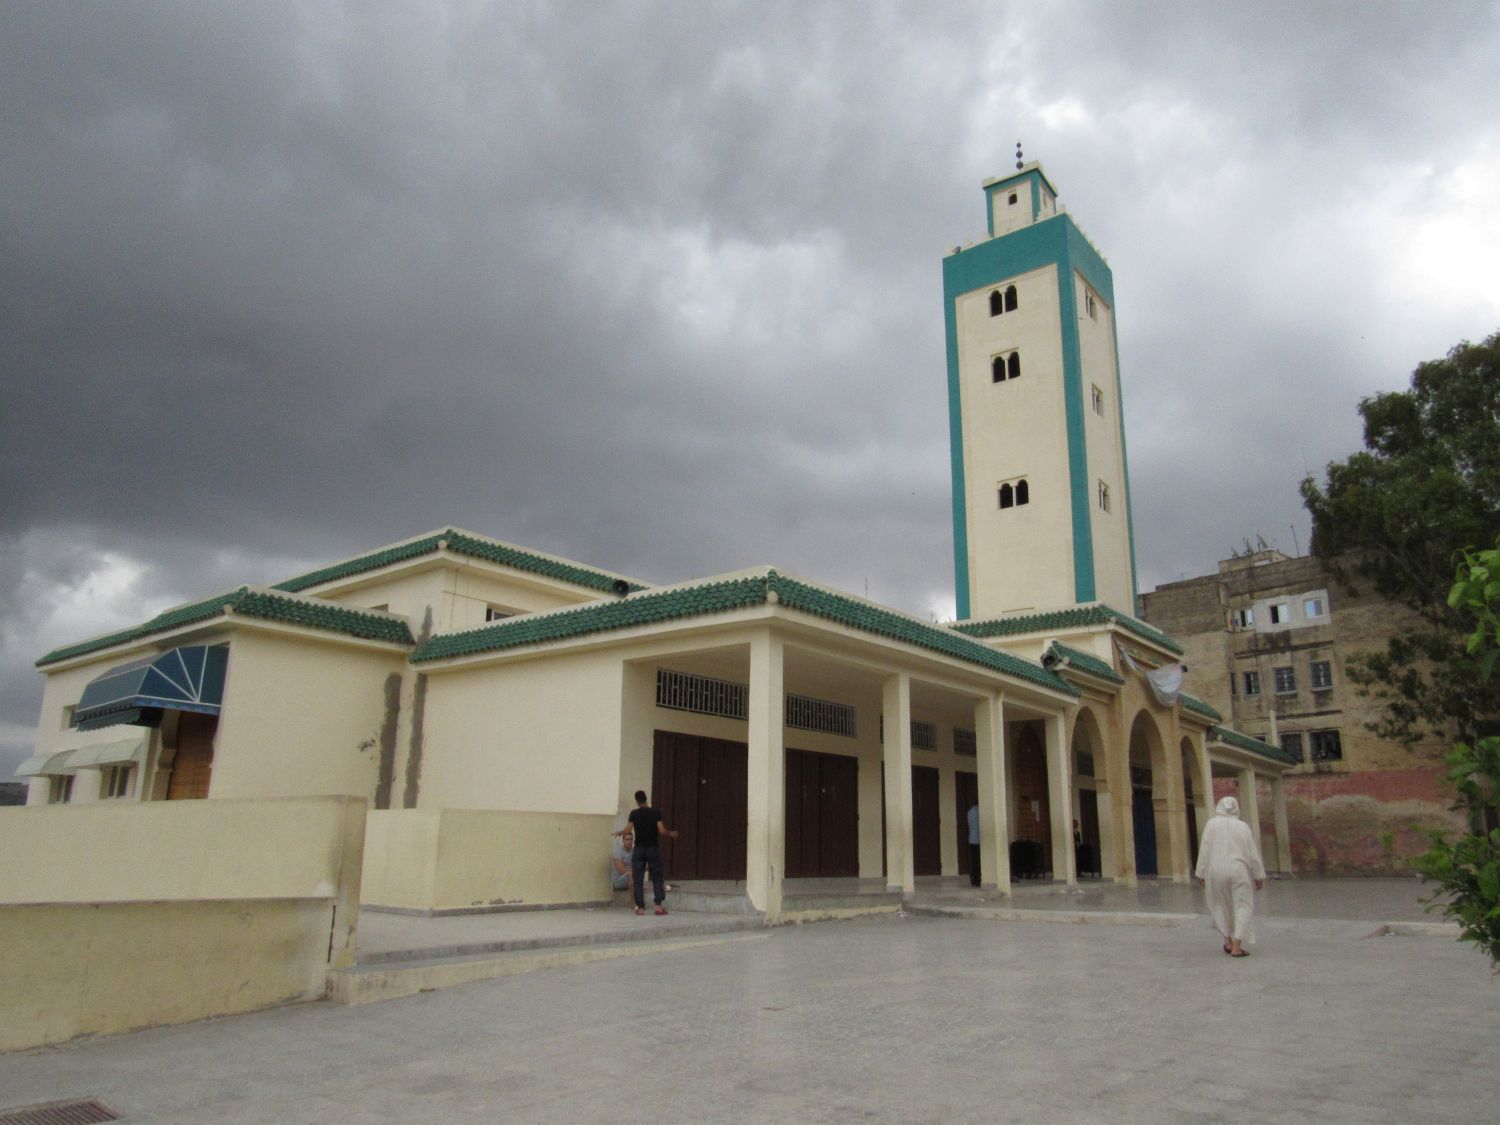 Masjid al-Ansar - Exterior view toward the minaret and entrance portico